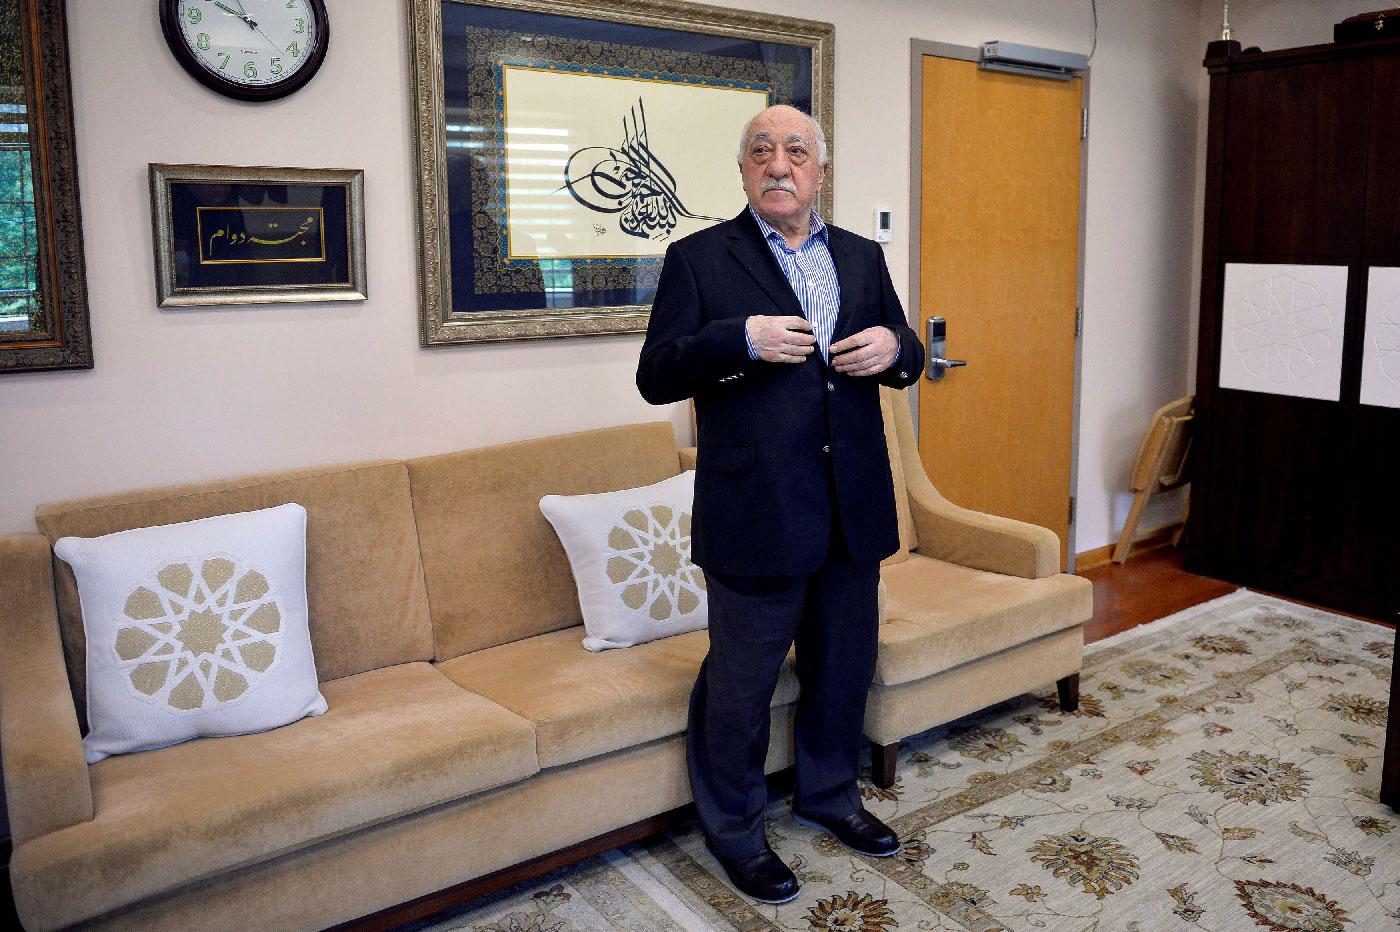 US based cleric Fethullah Gulen at his home in Saylorsburg, Pennsylvania